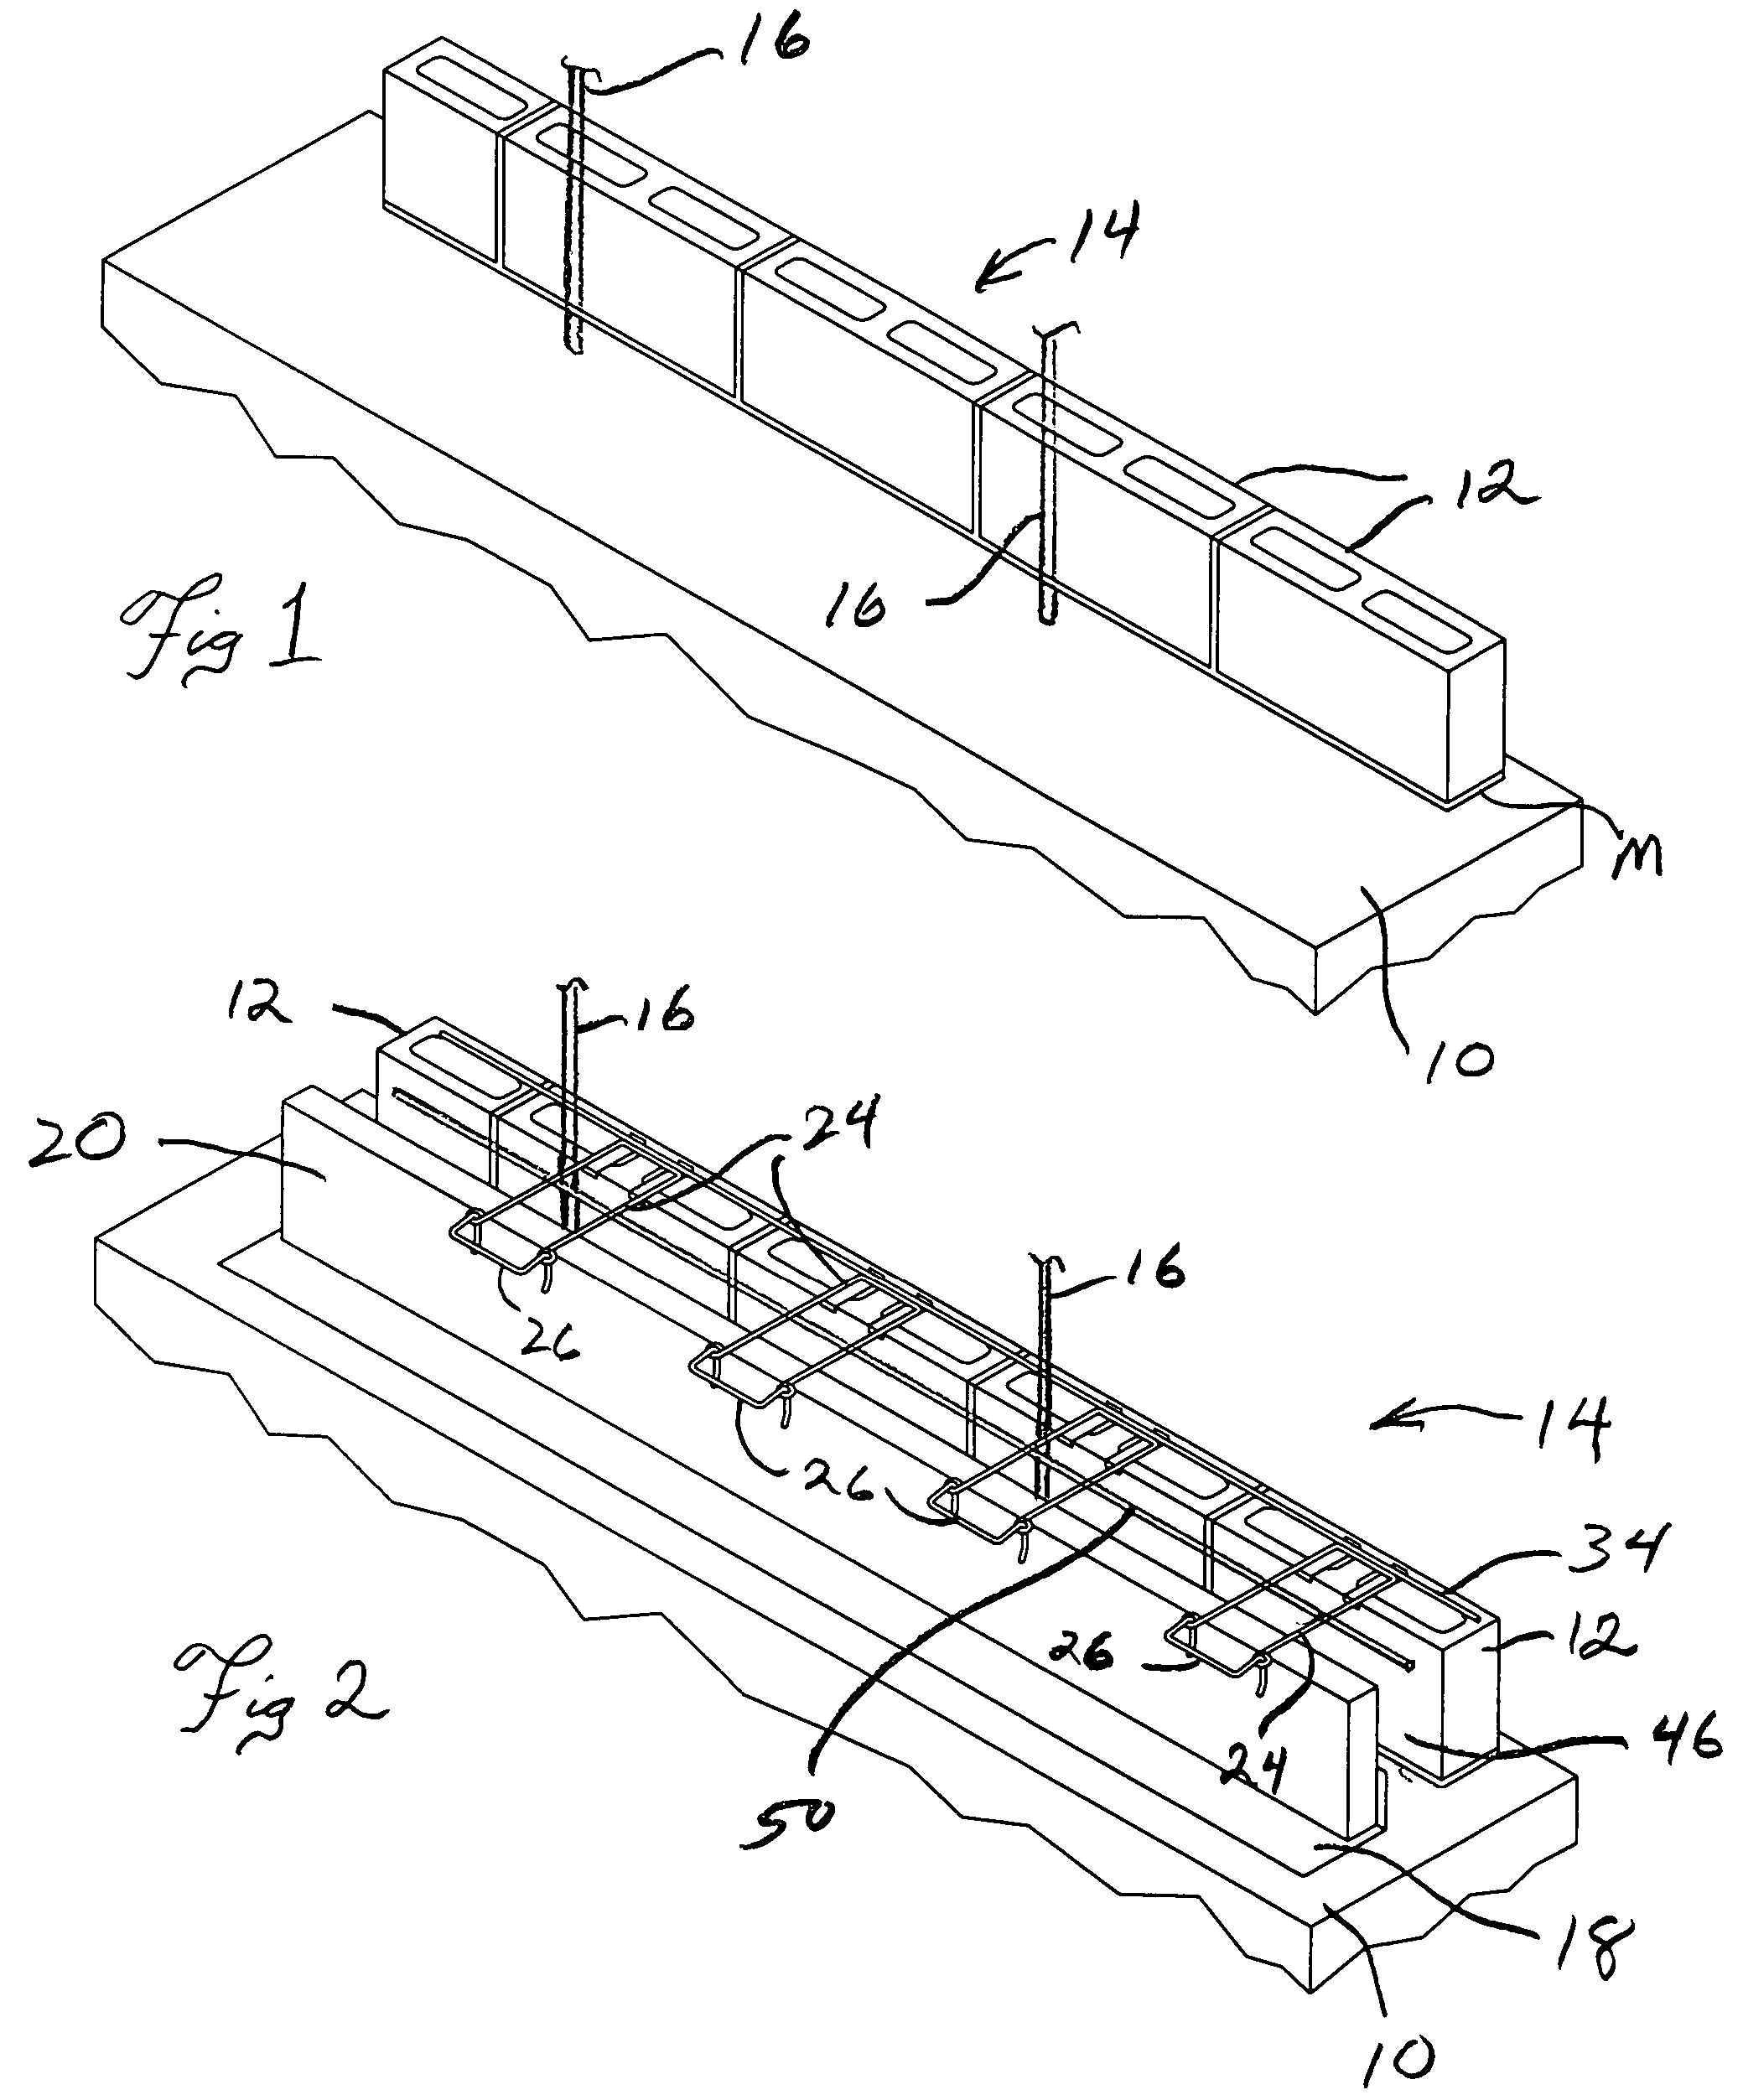 Masonry cavity wall construction and method of making same